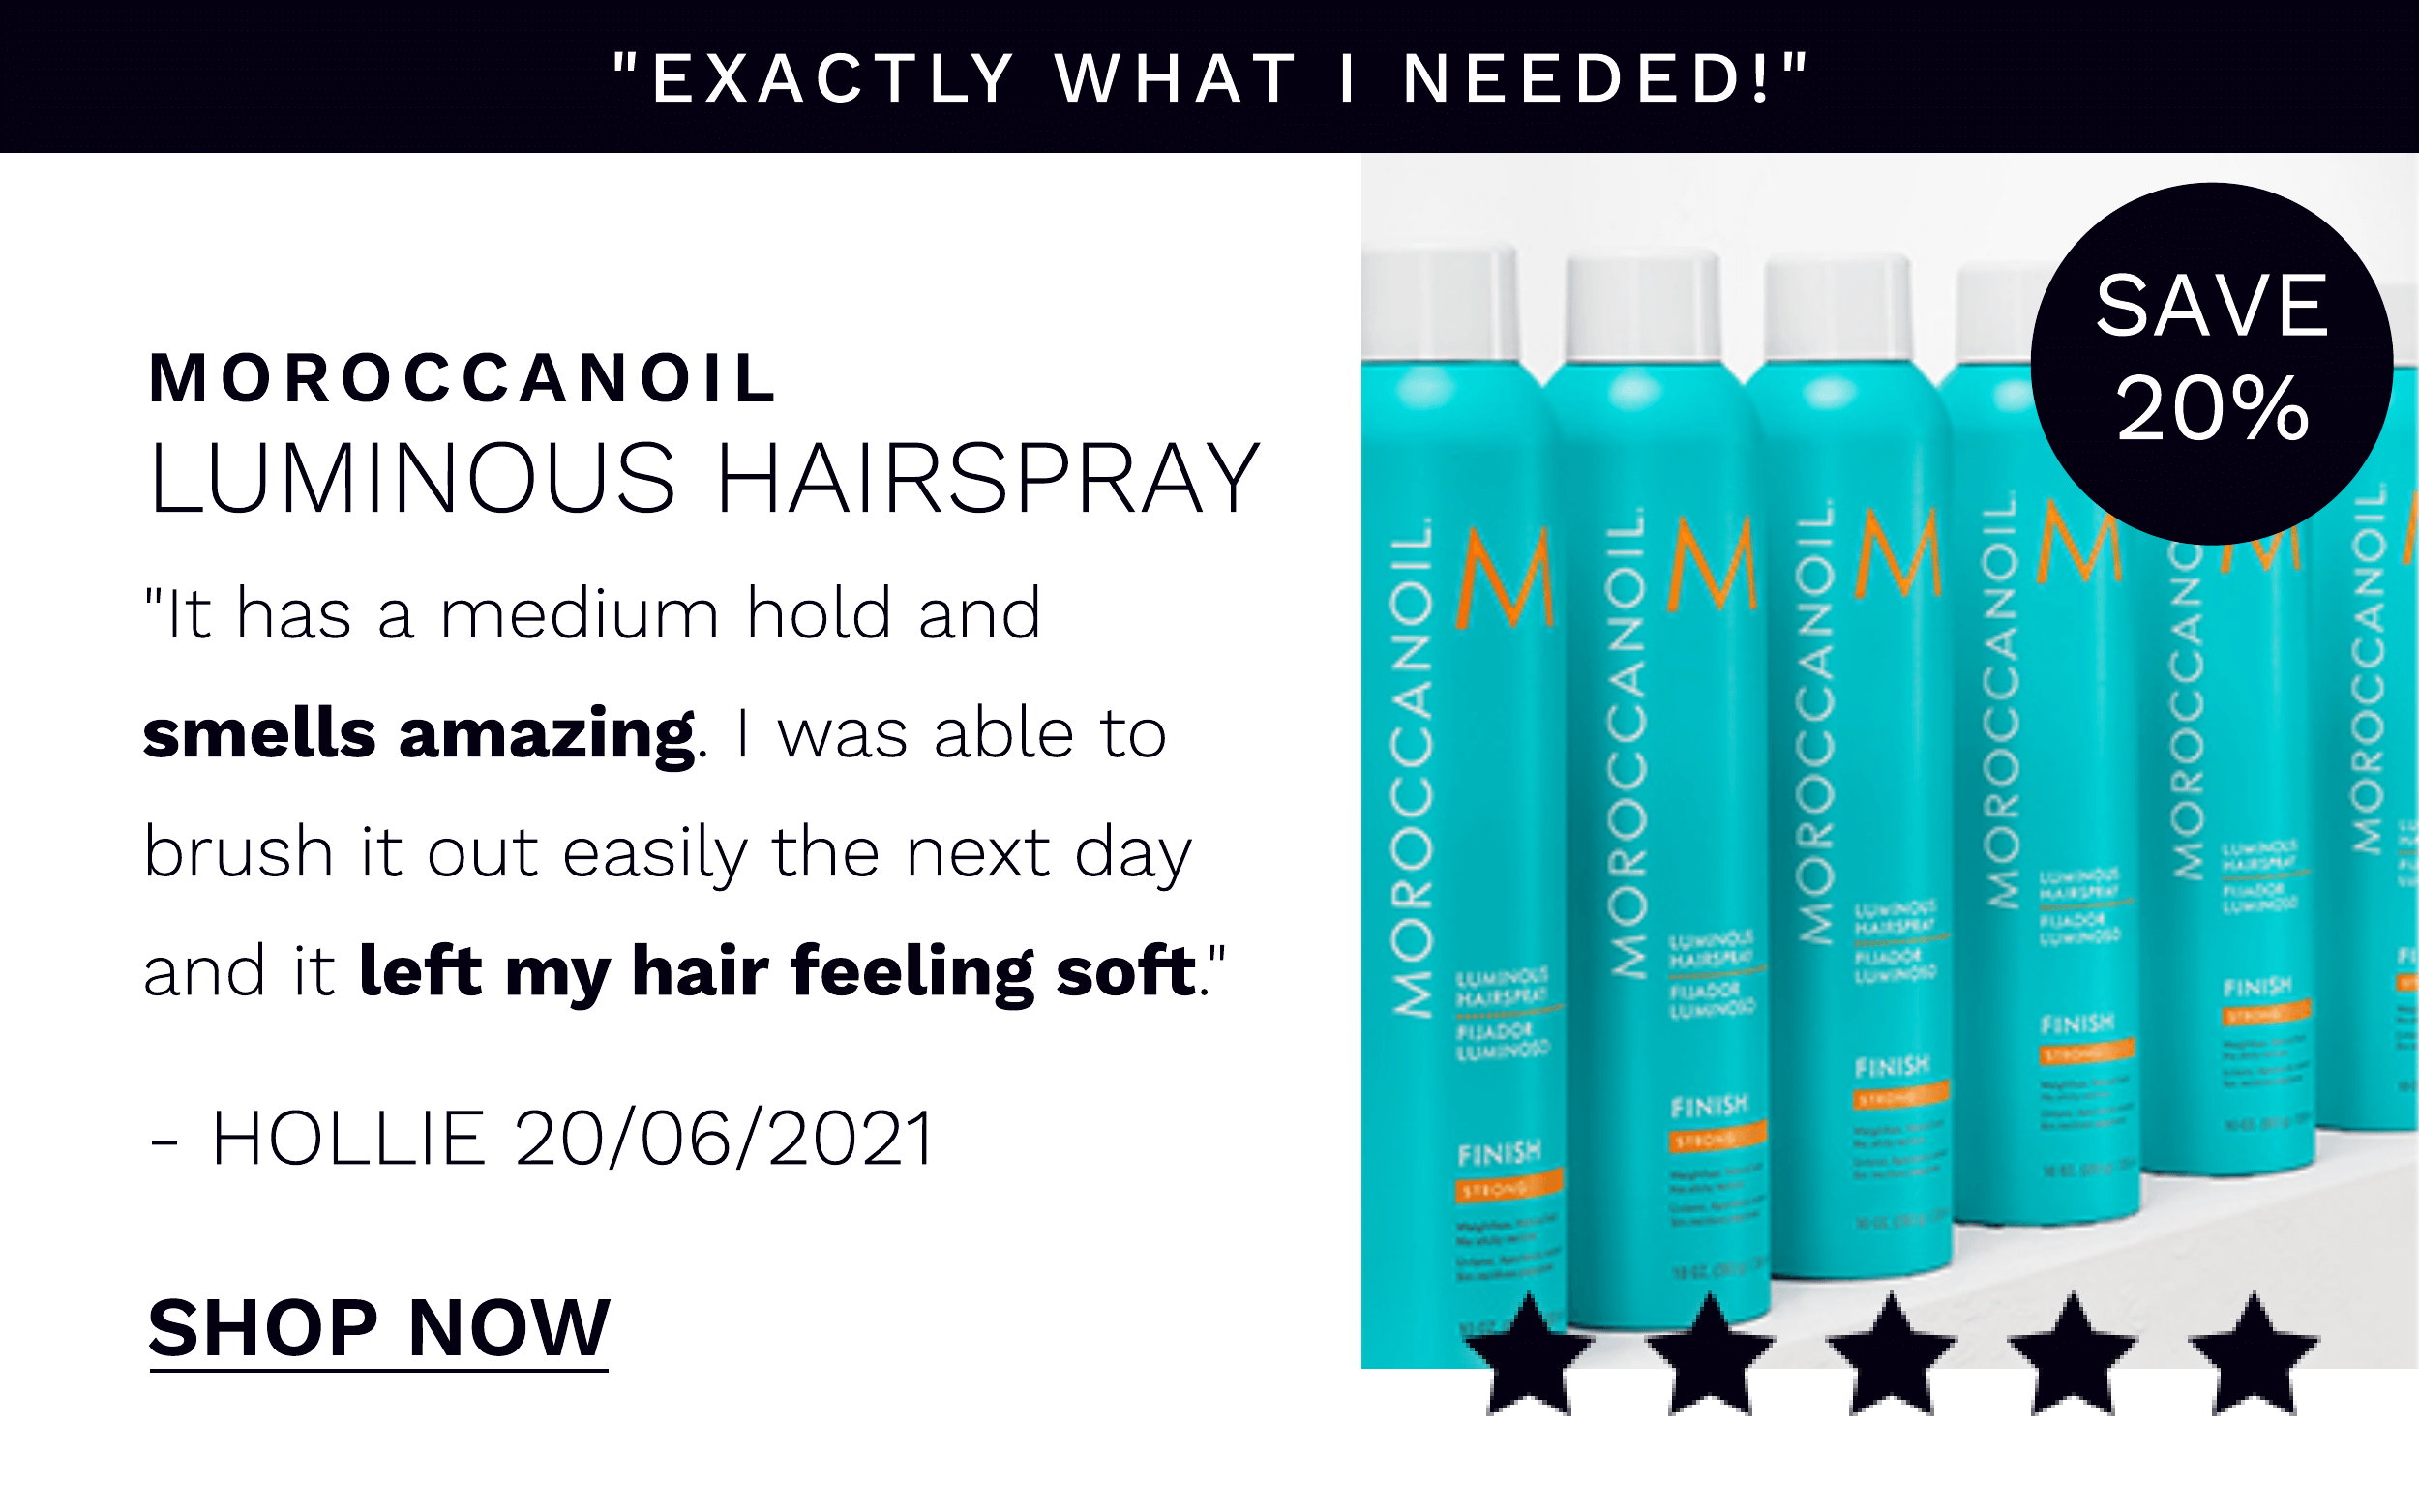 Moroccanoil luminous hairspray